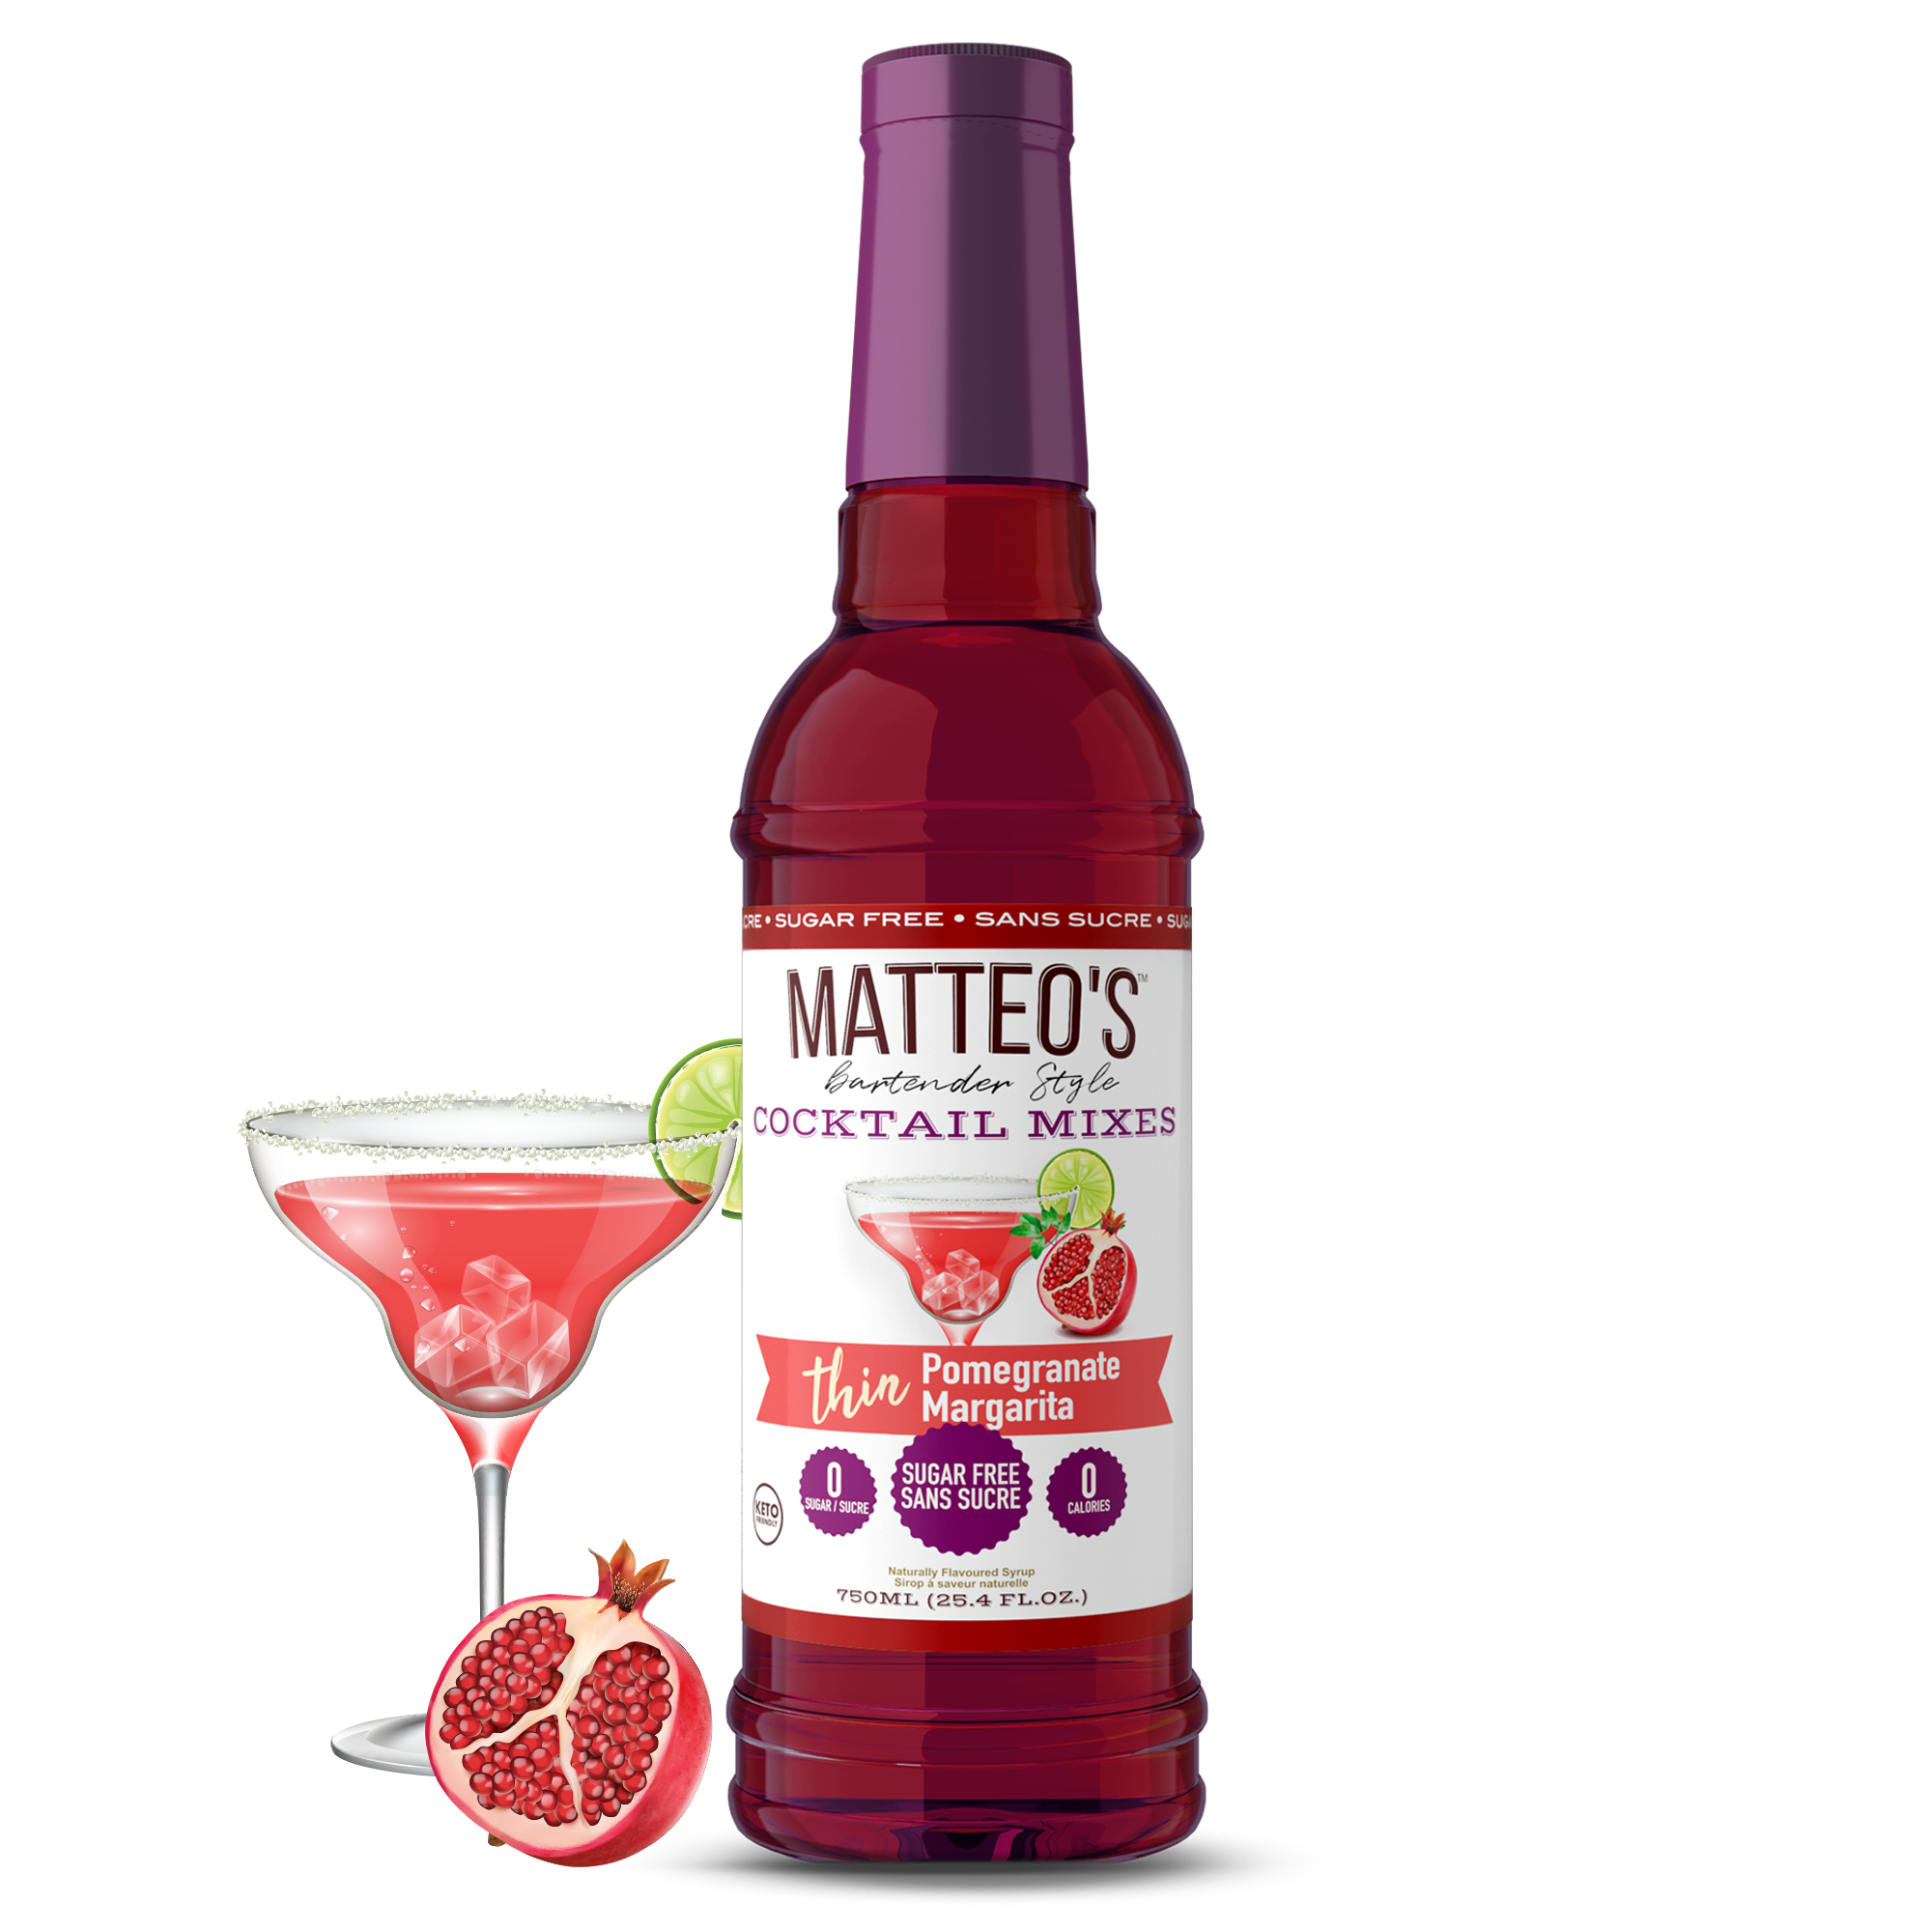 Sugar Free Cocktail Mixes - Pomegranate Margarita